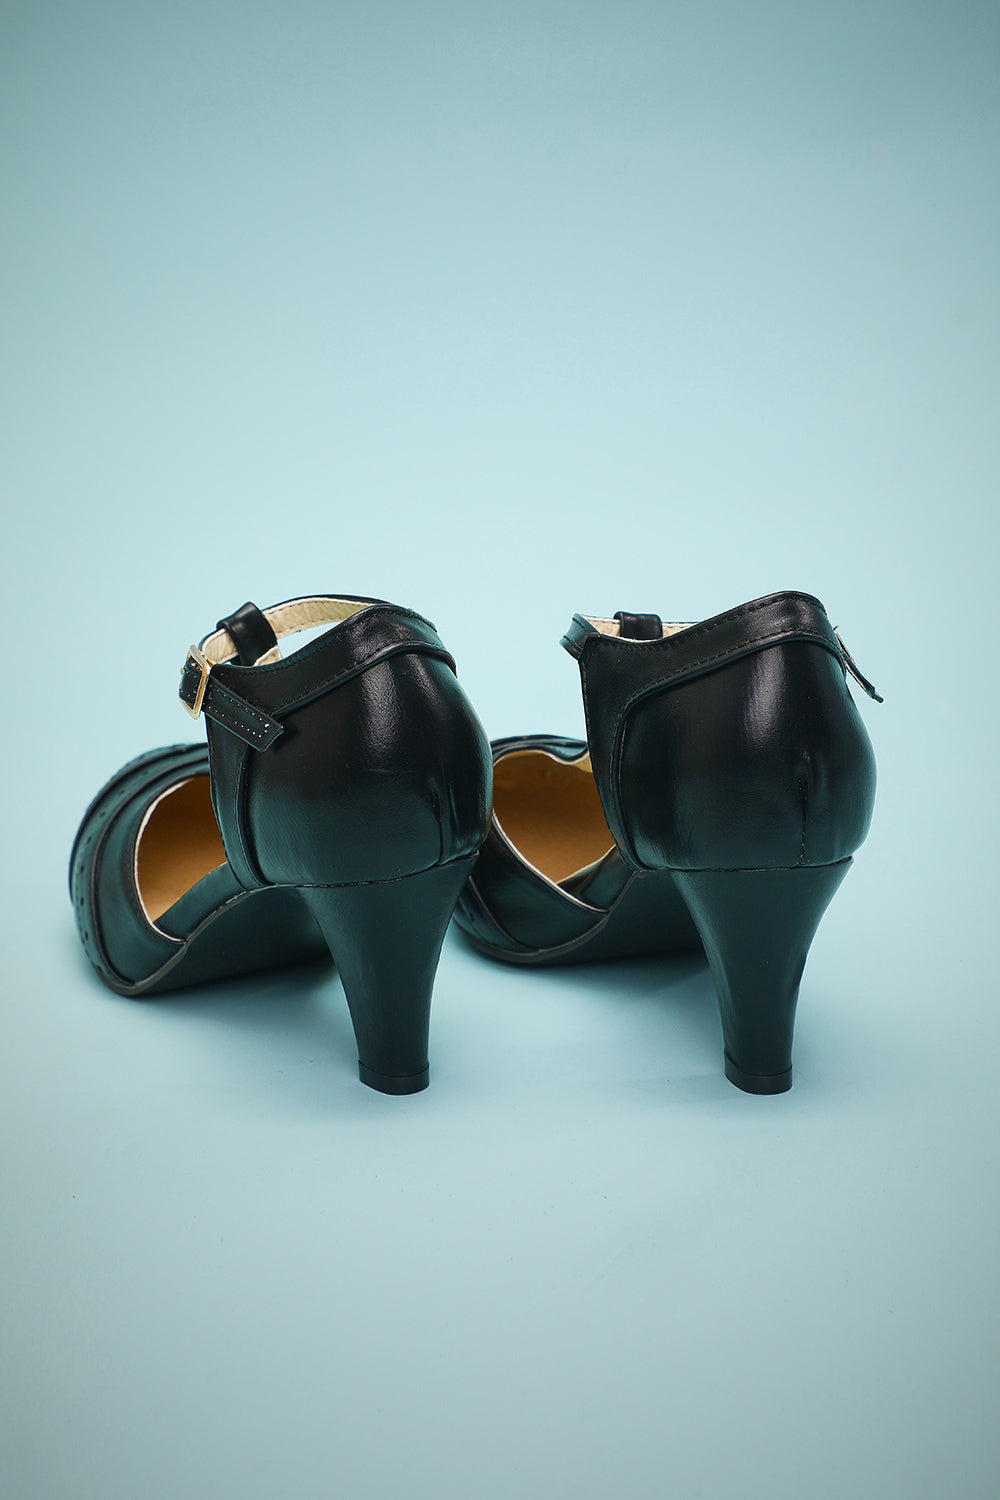 23 Colors) Aqua Blue Shoes With Heels Peep Toe Party Wear Pumps Size 8 -  Pumps - AliExpress